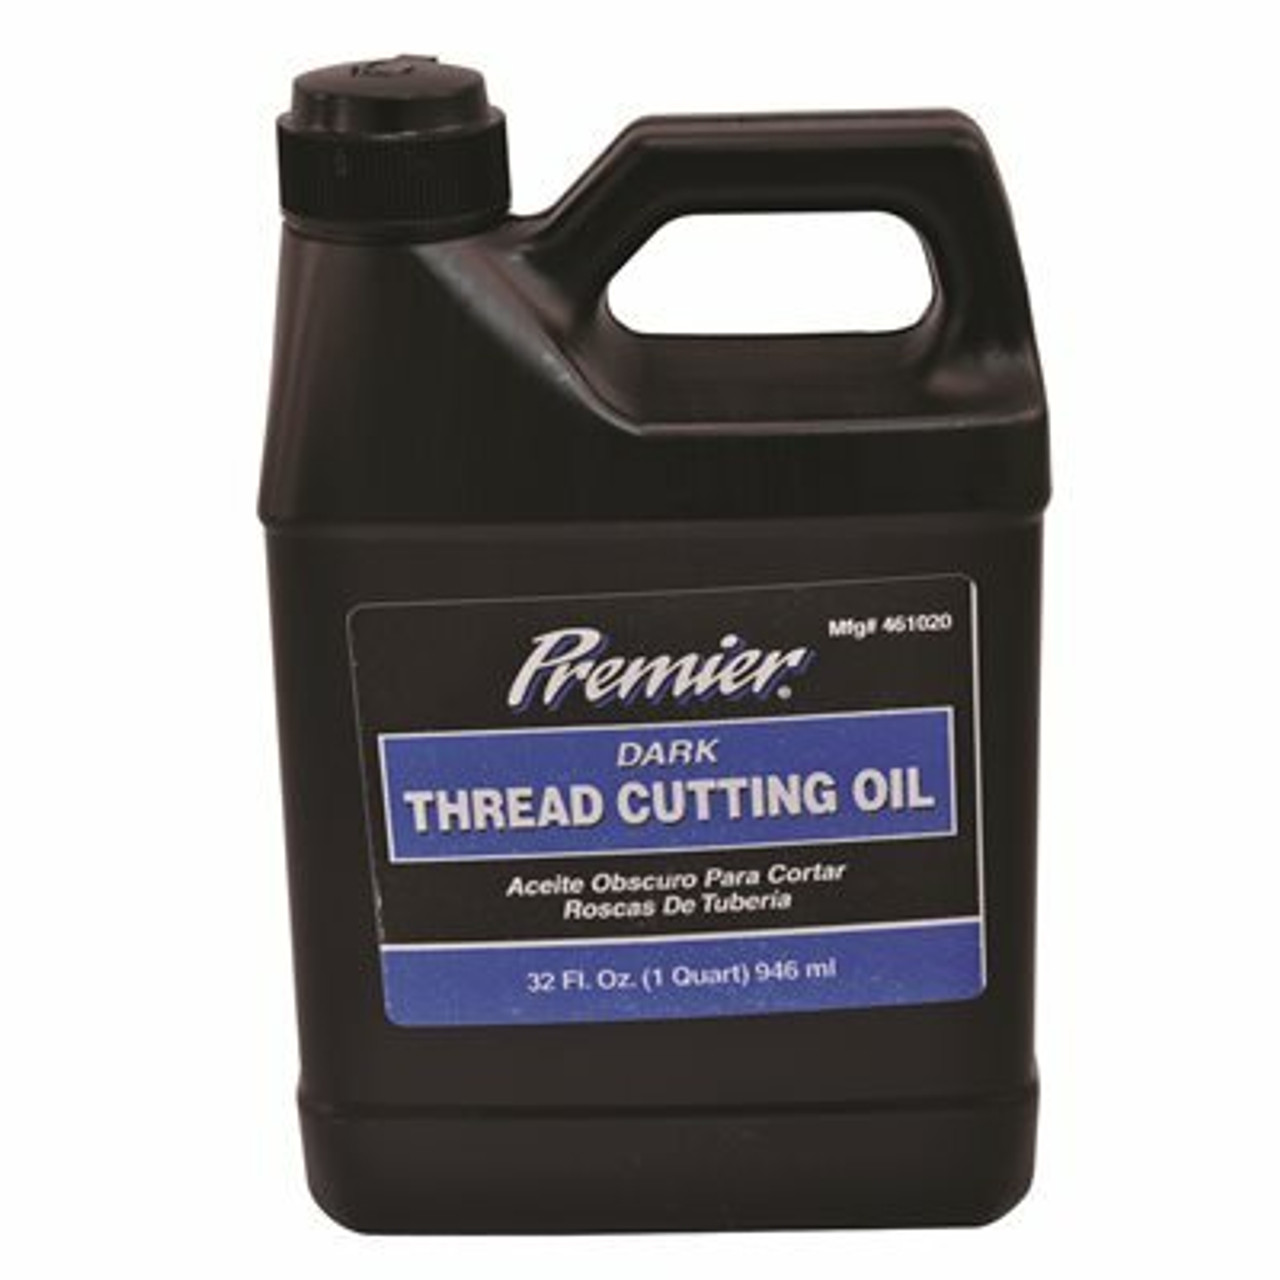 Premier Thread Cutting Oil Dark Gallon